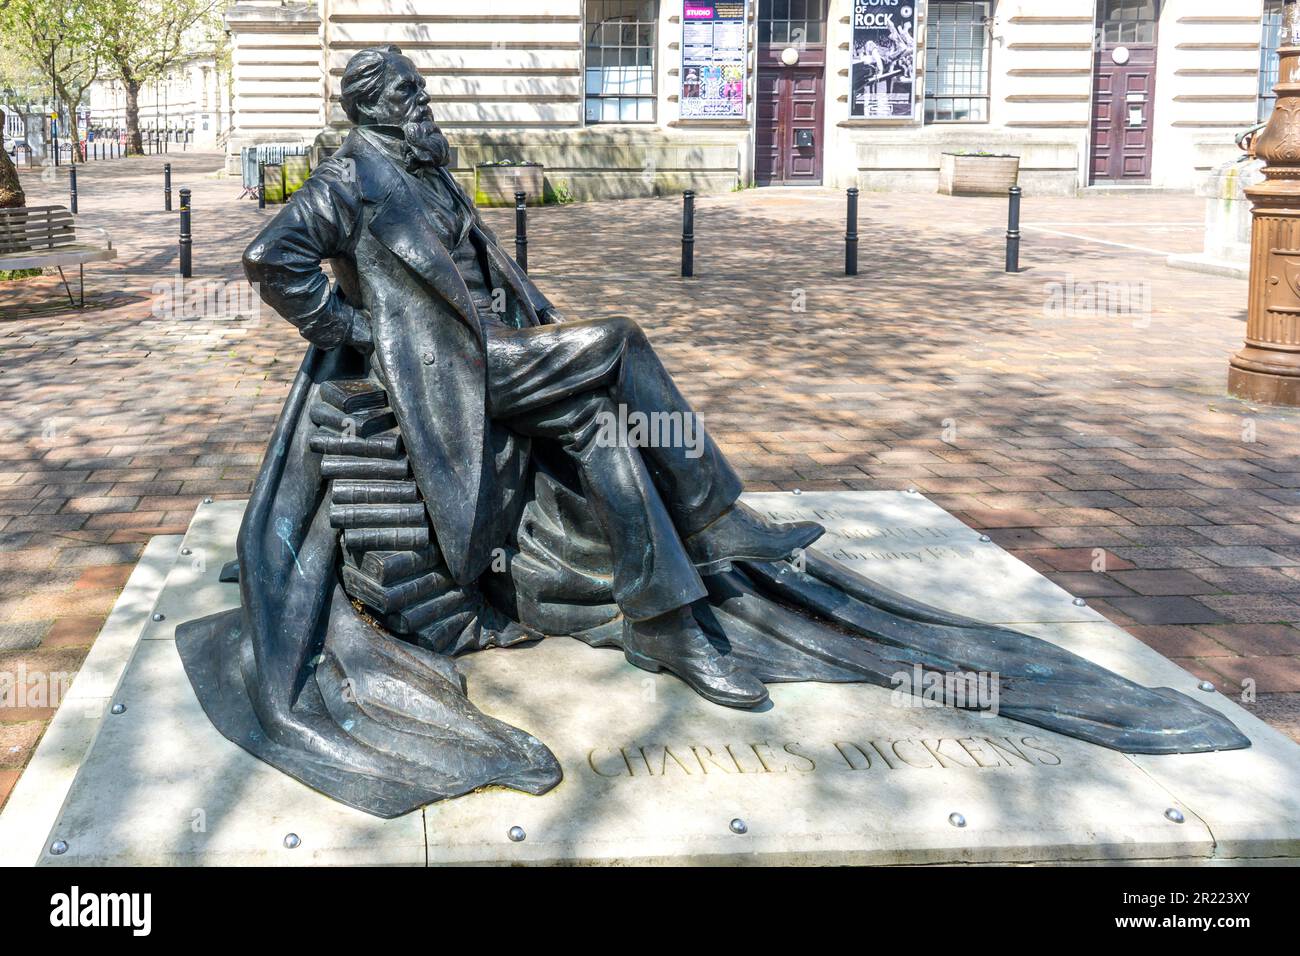 Statue de Charles Dickens (romancier victorien), place Guildhall, Portsmouth, Hampshire, Angleterre, Royaume-Uni Banque D'Images